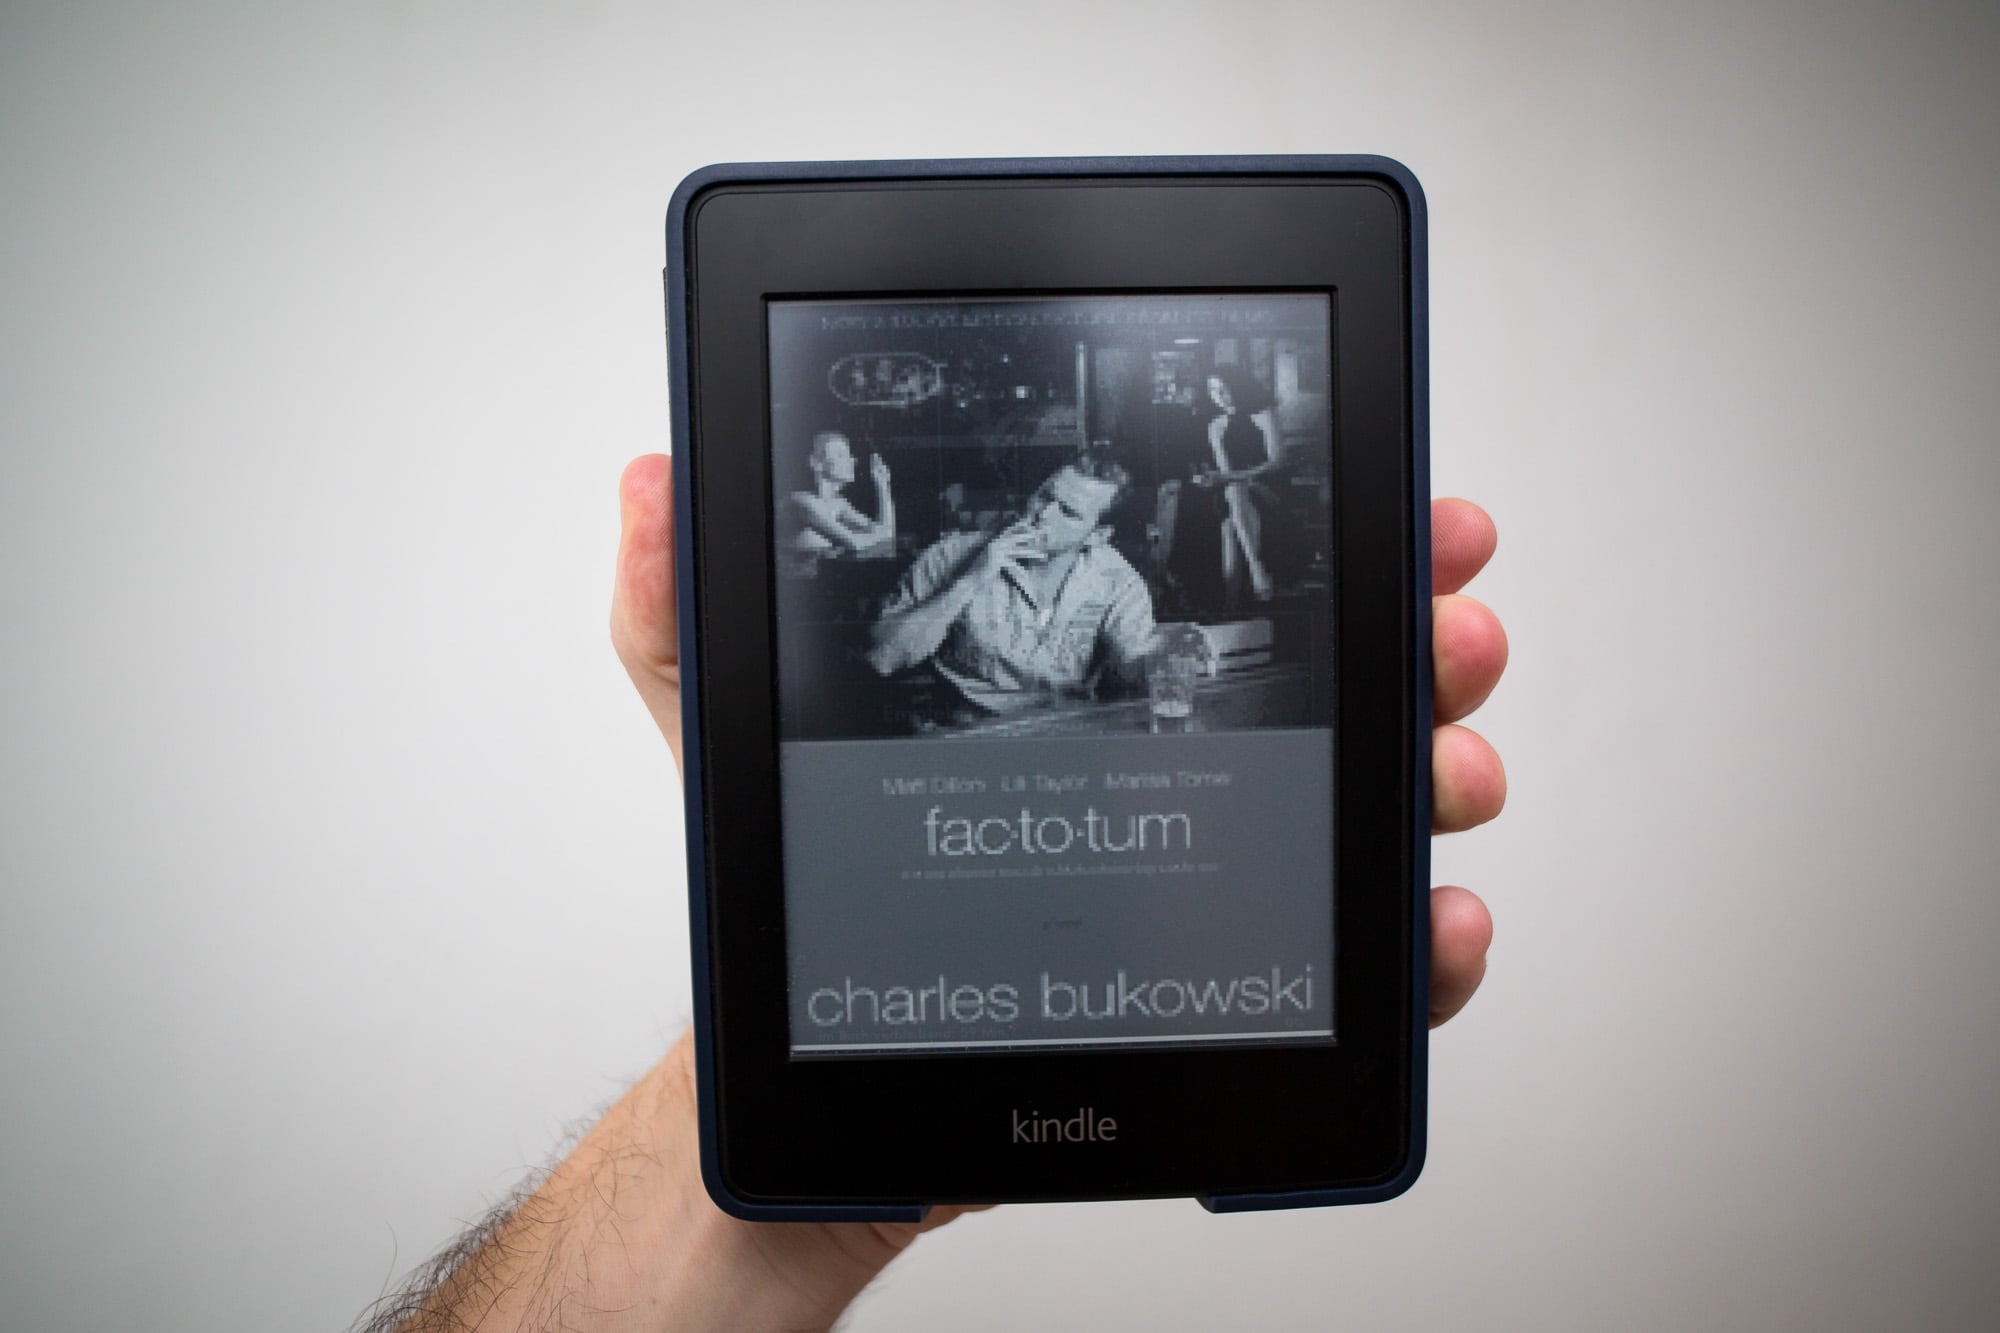 Charles Bukowski - "Factotum"